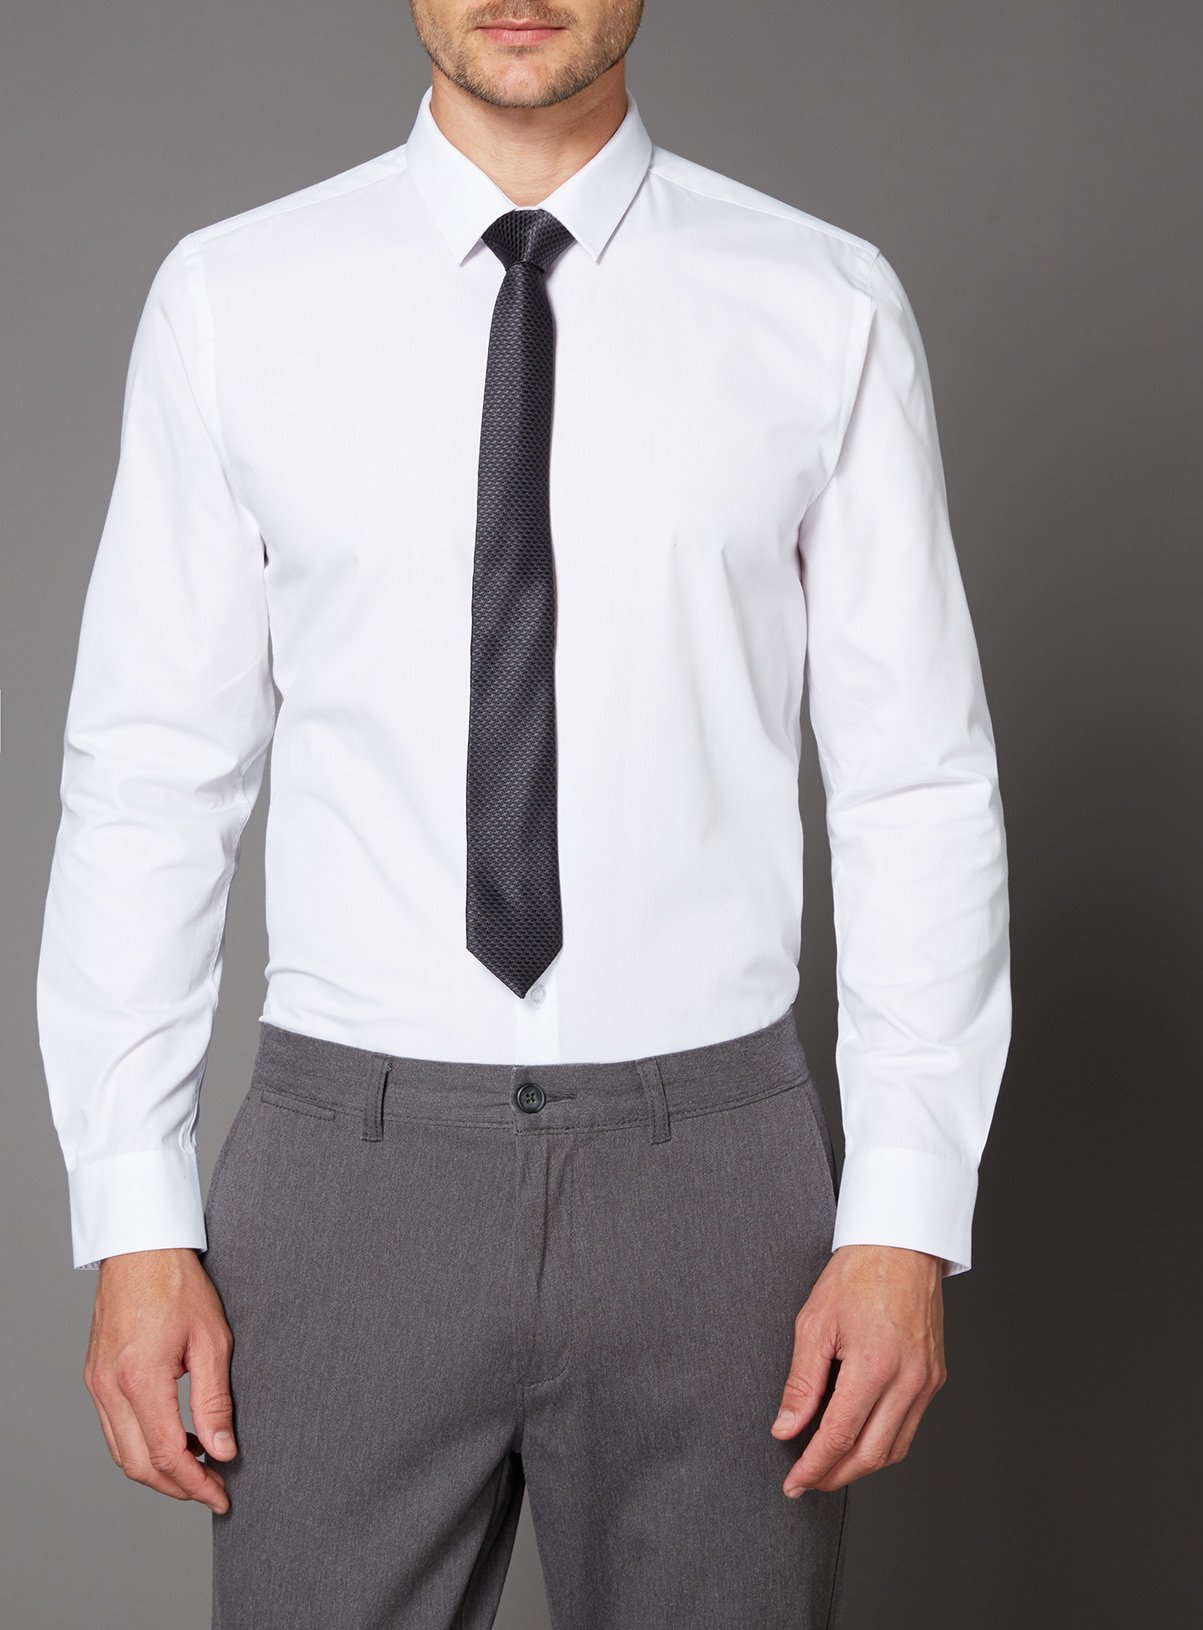 black dress shirt white tie